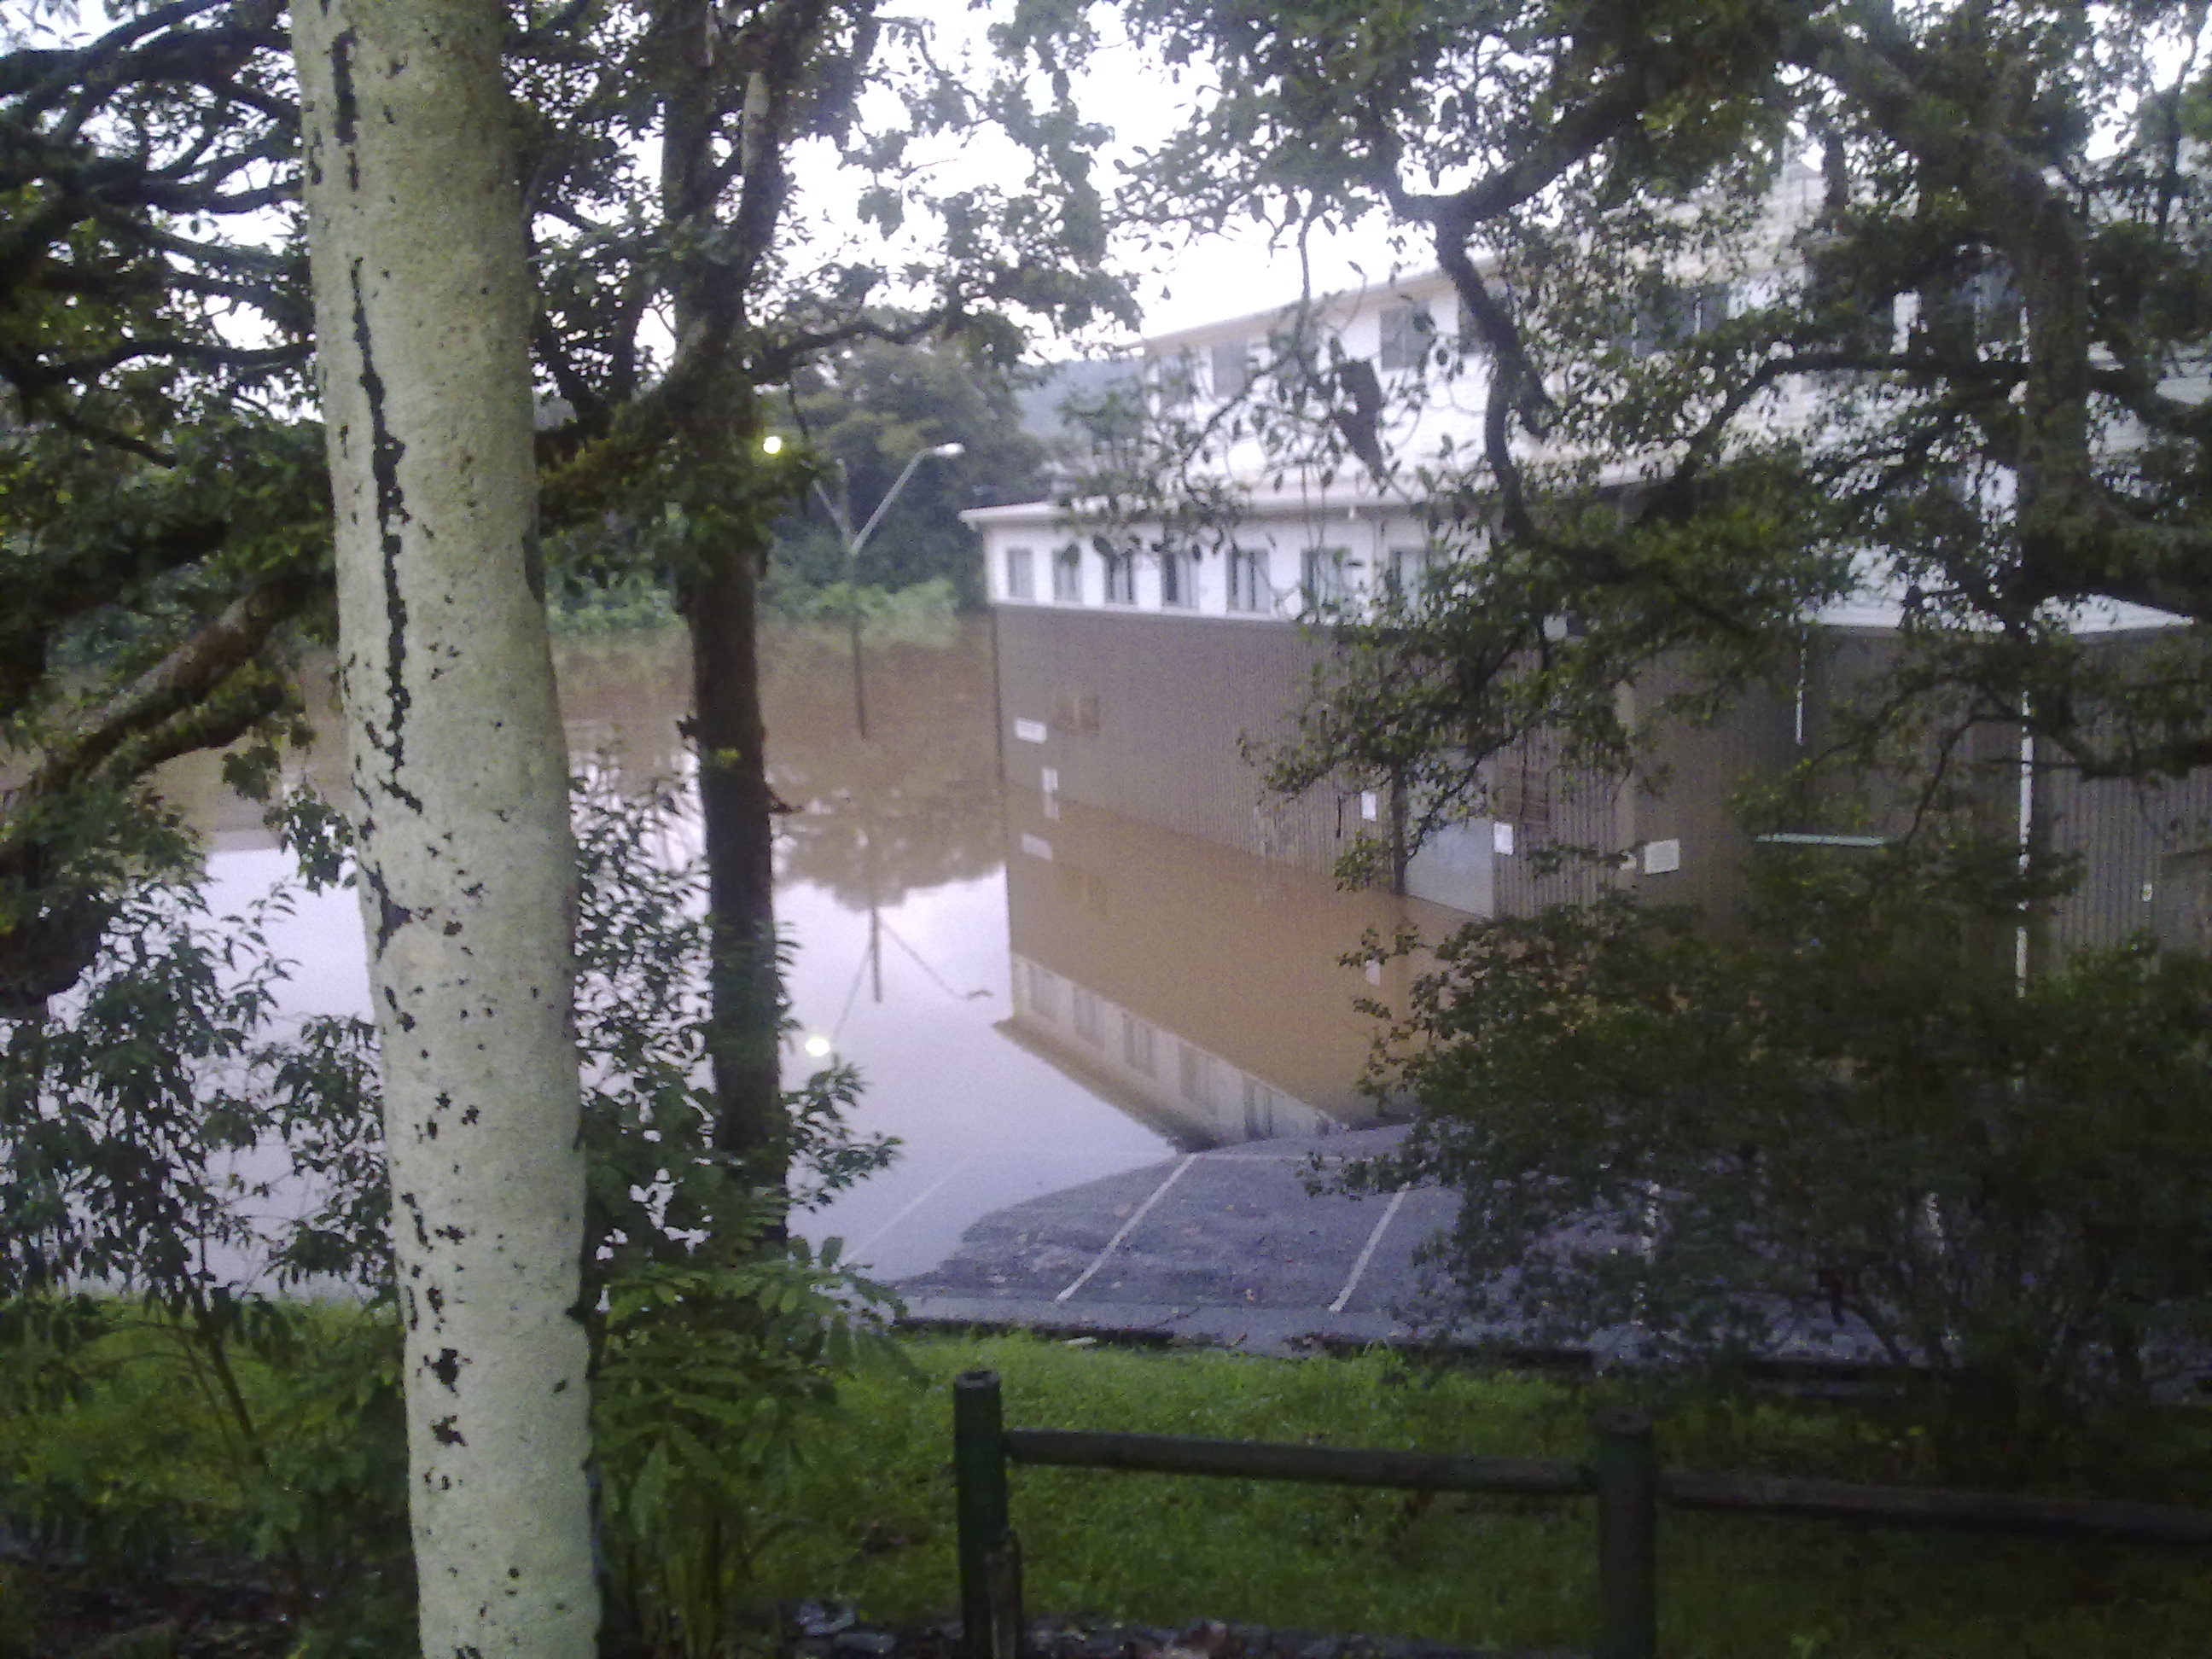 Flooding near the rowing club, Lismore